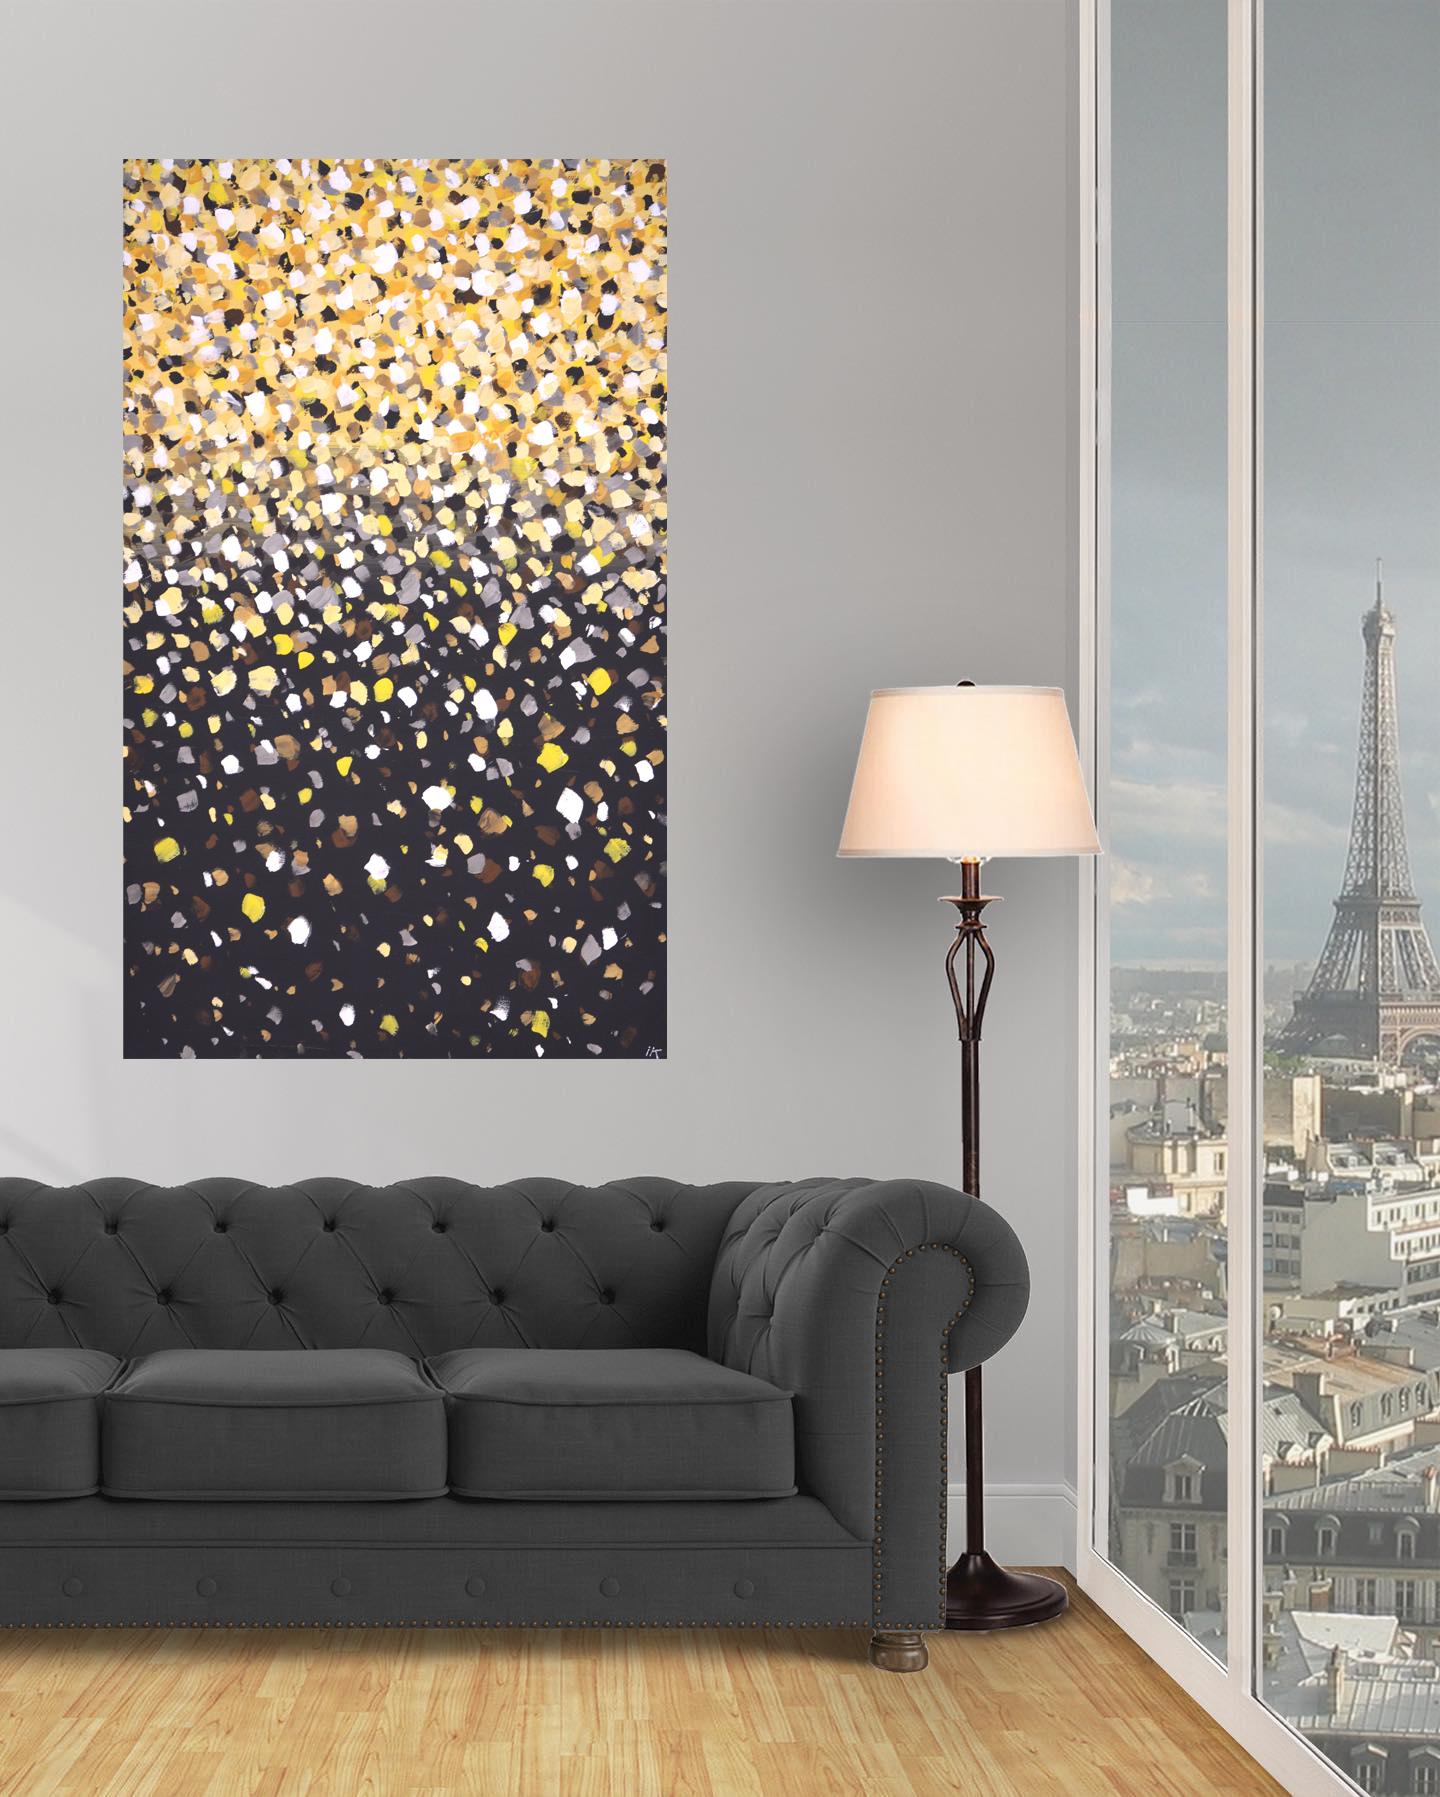 Poantillism. Glare. Interior Painting Modern Design with Black Gold Yellow Dots 11